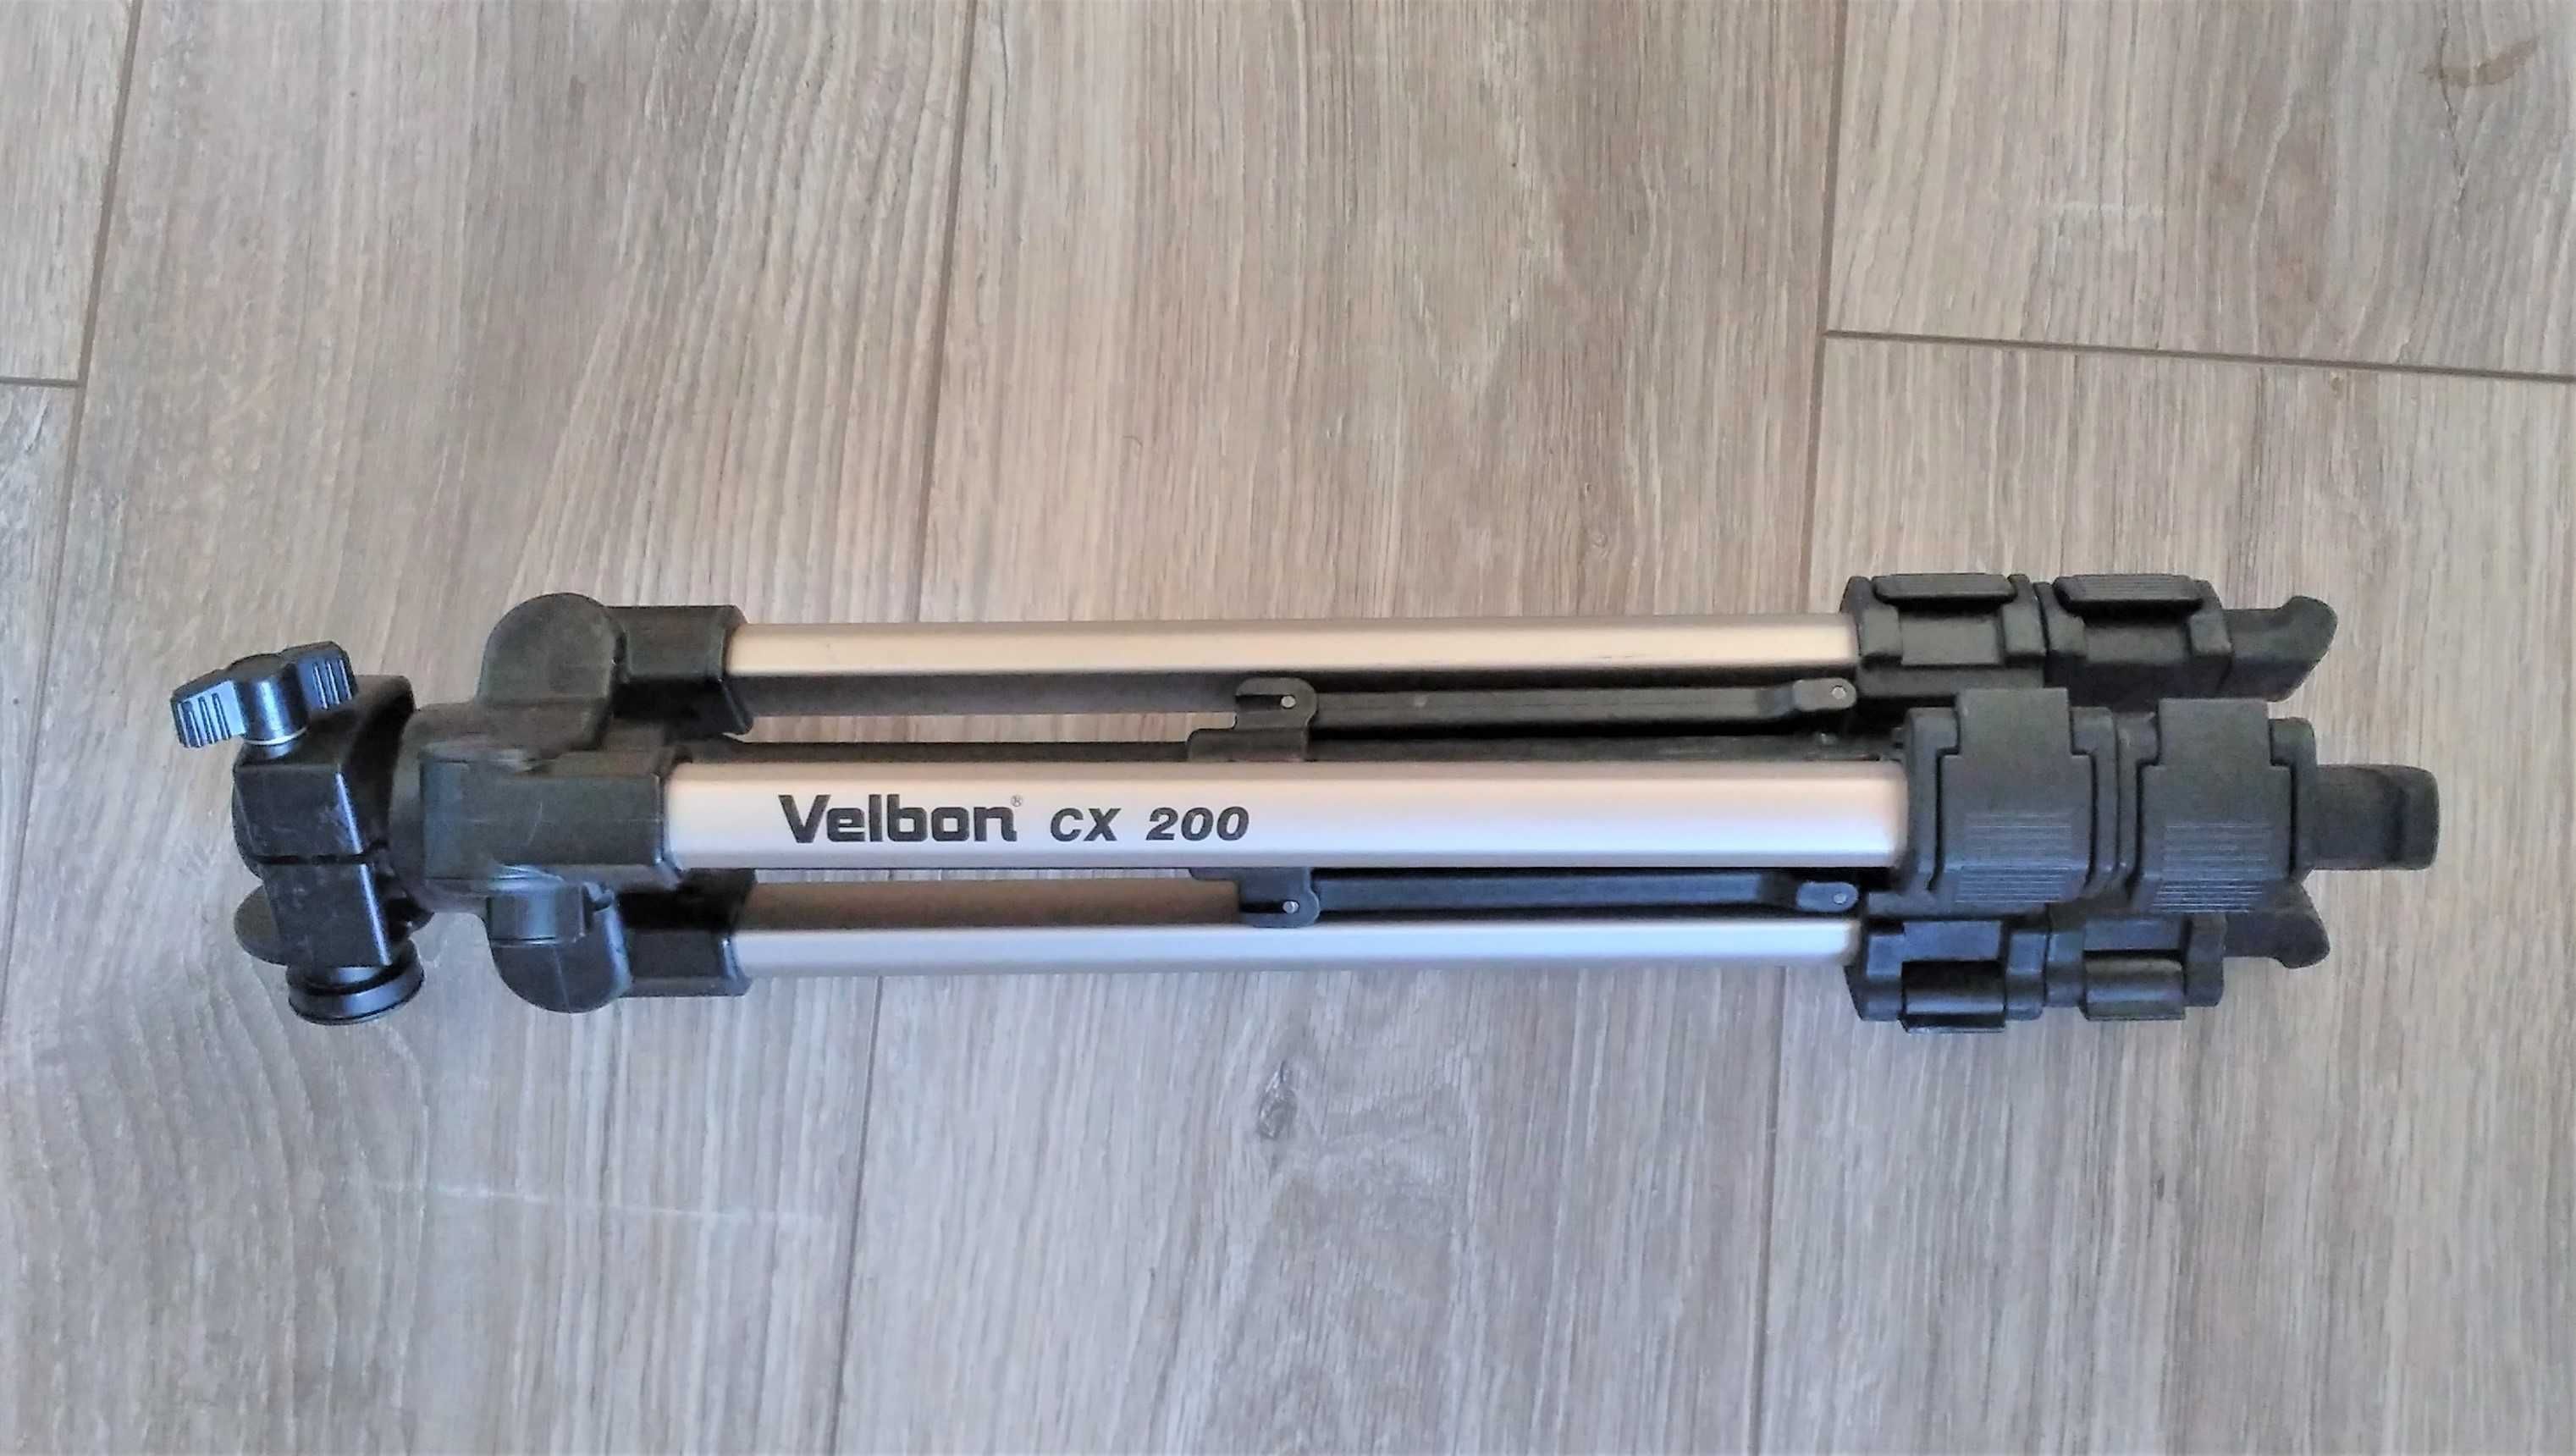 Штатив Velbon CX 200 для фотокамеры,  некомплект